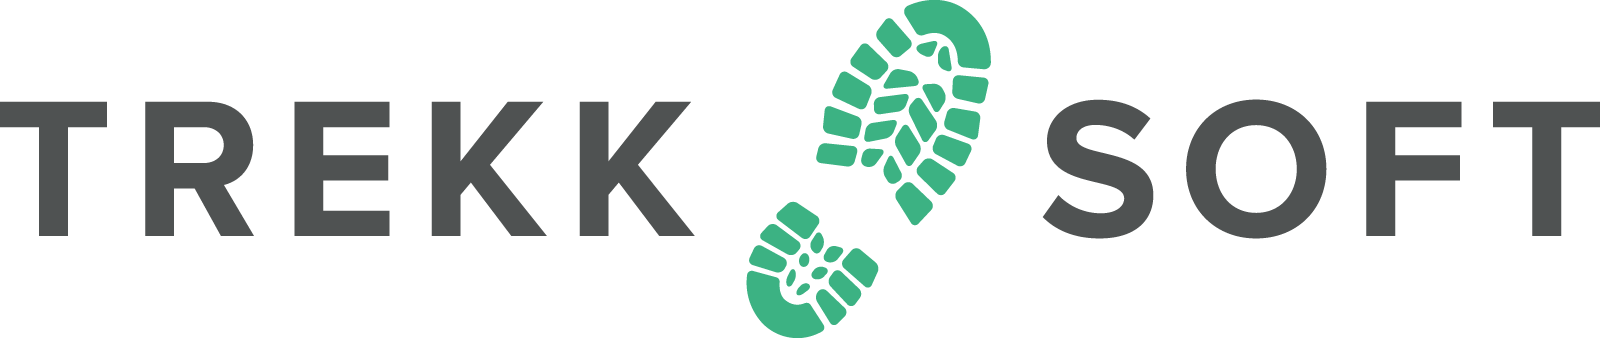 TrekkSoft logo.png